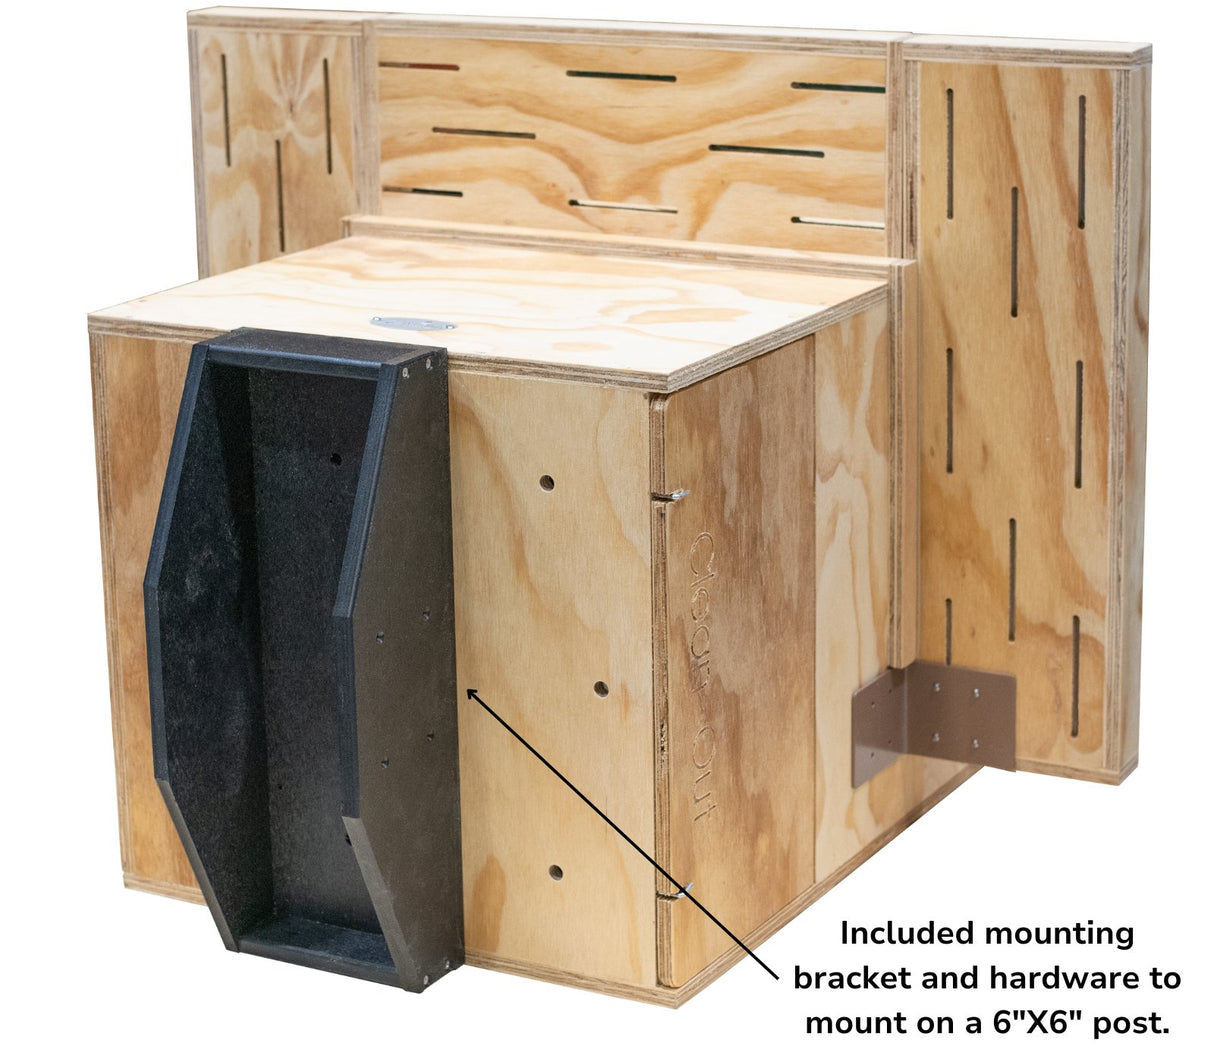 JCS Wildlife X Large Barn Owl Box with Poly Lumber Roof and Exercise Platform - JCS Wildlife